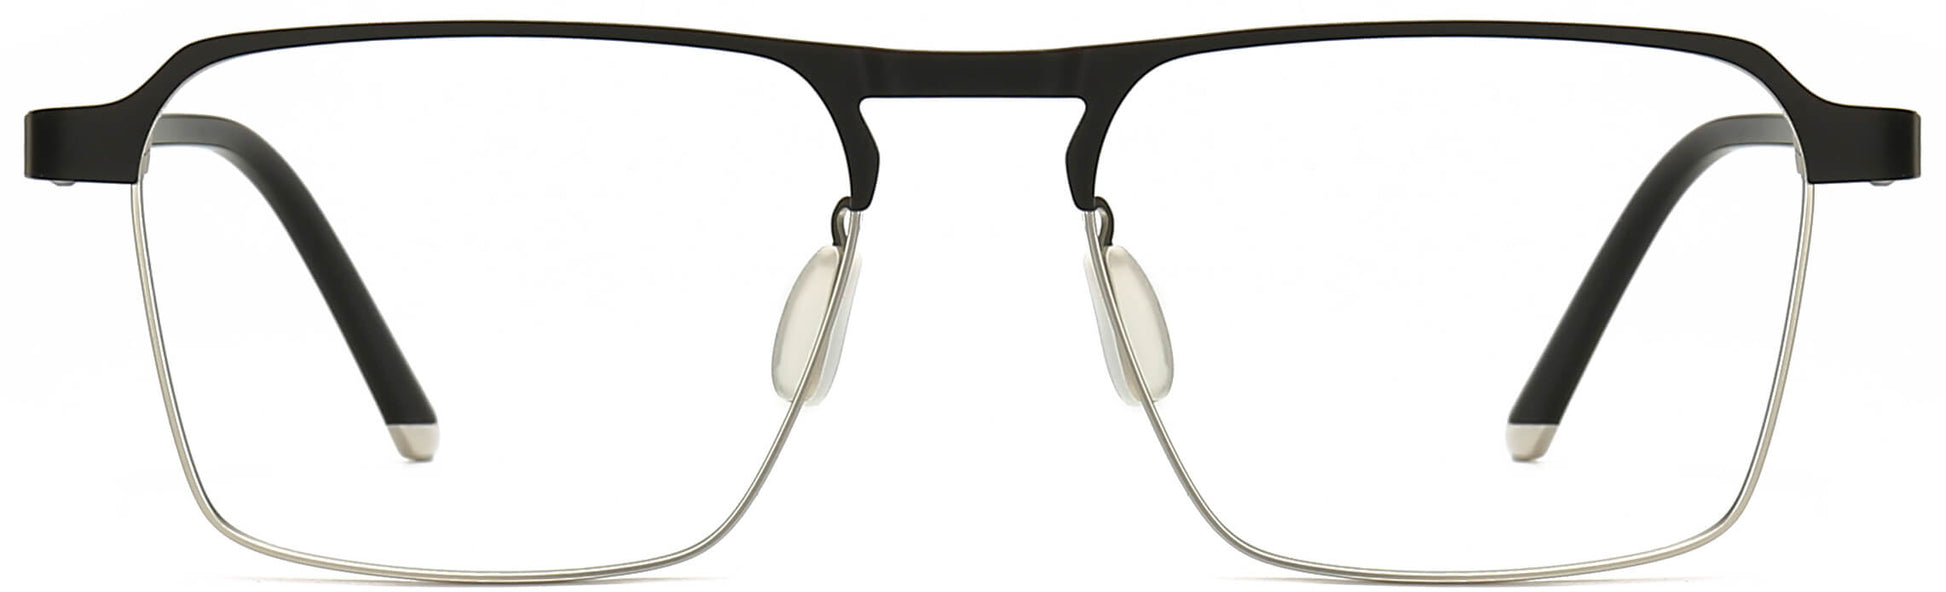 November Square Black Eyeglasses from ANRRI, front view